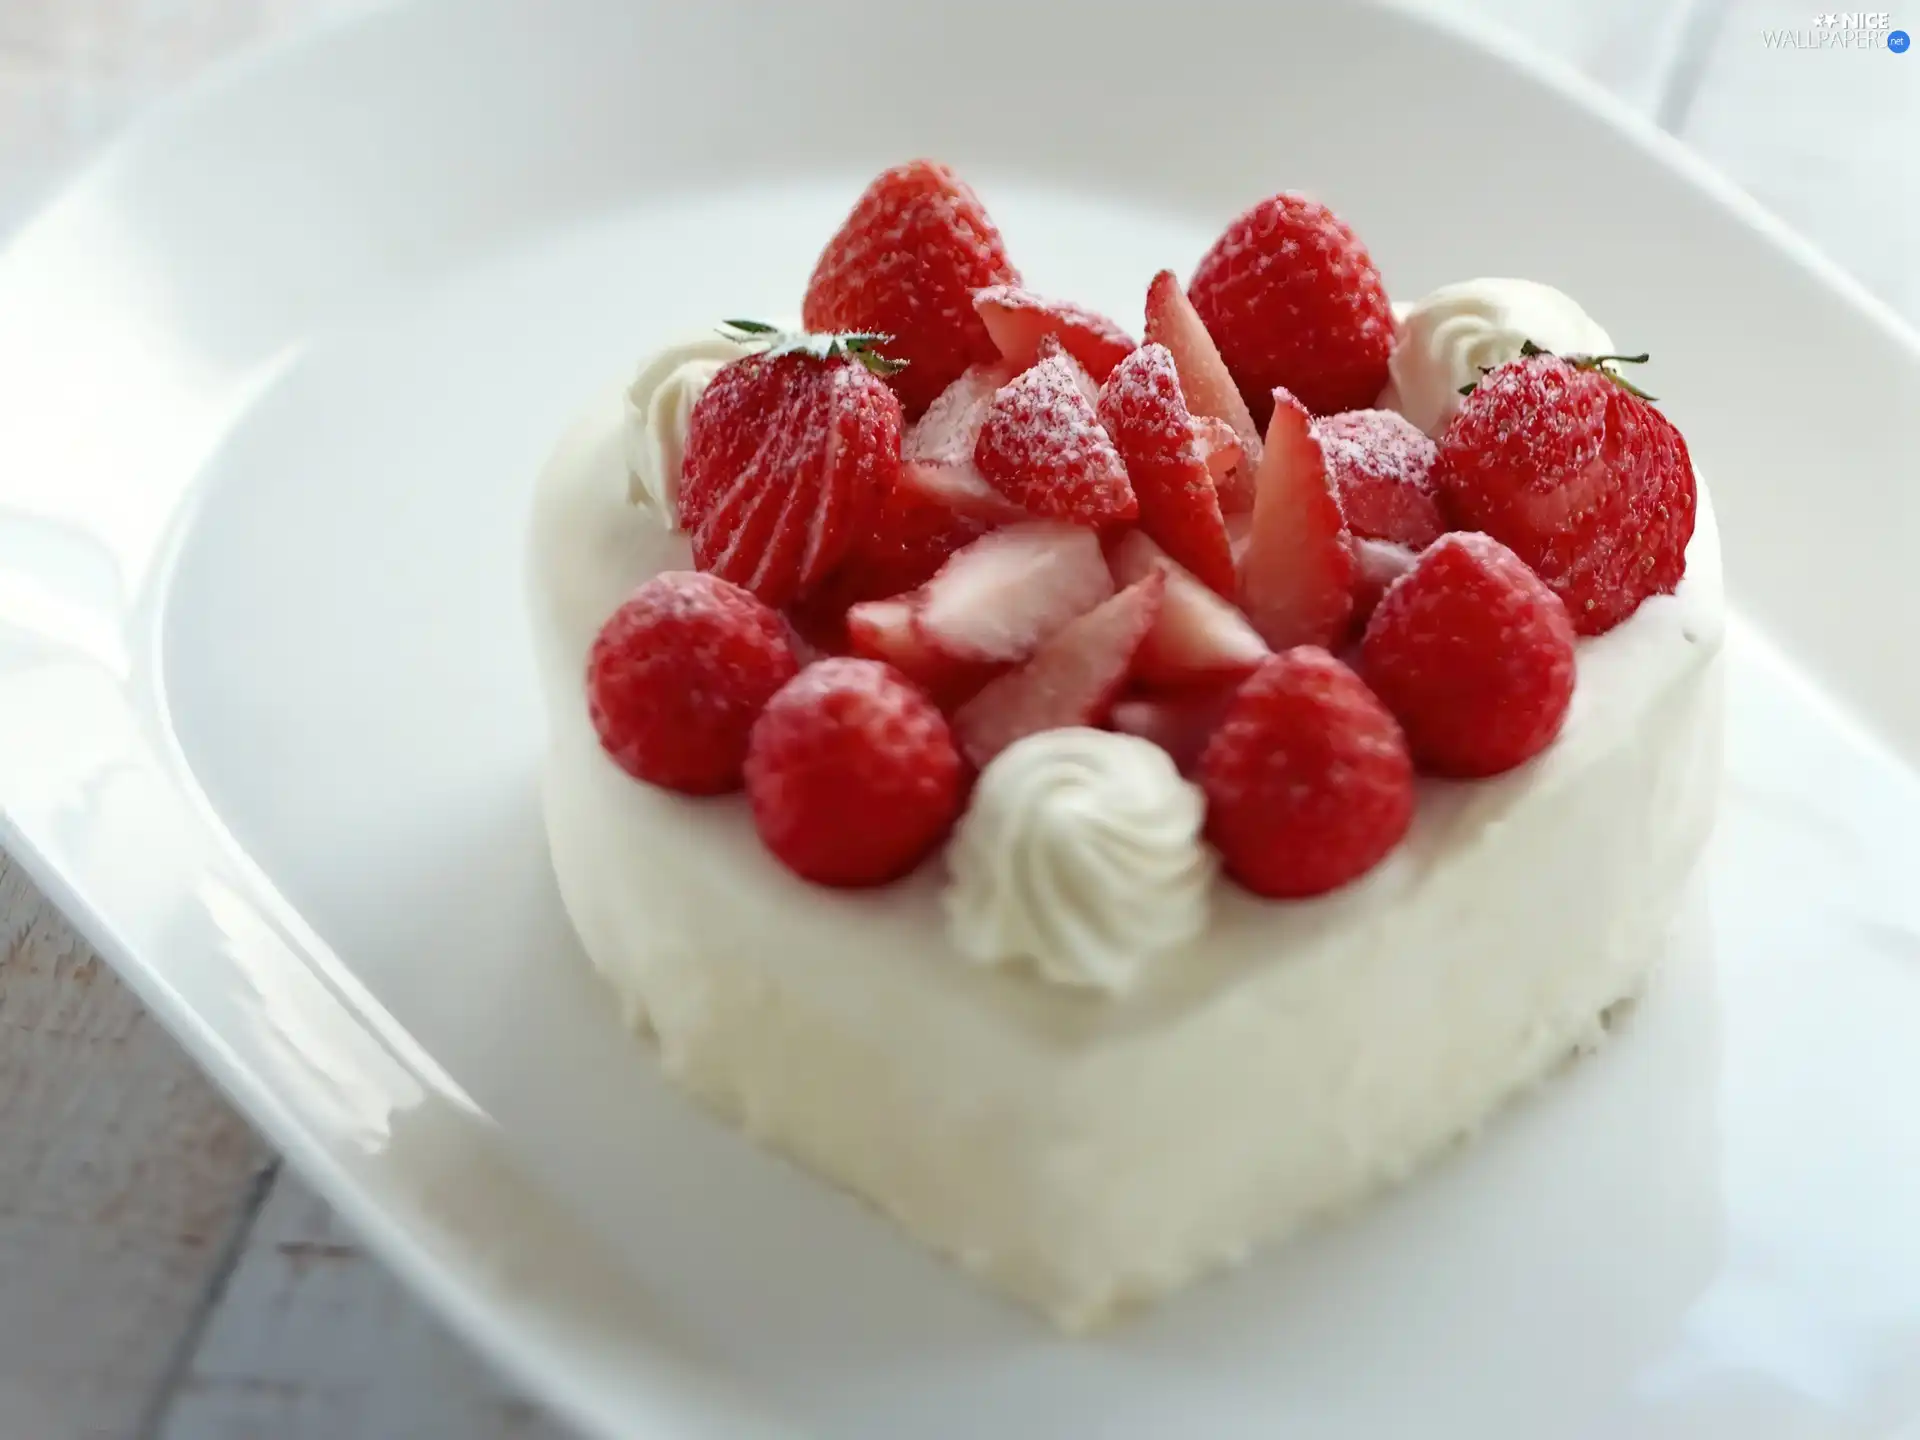 dessert, whipped, cream, strawberries